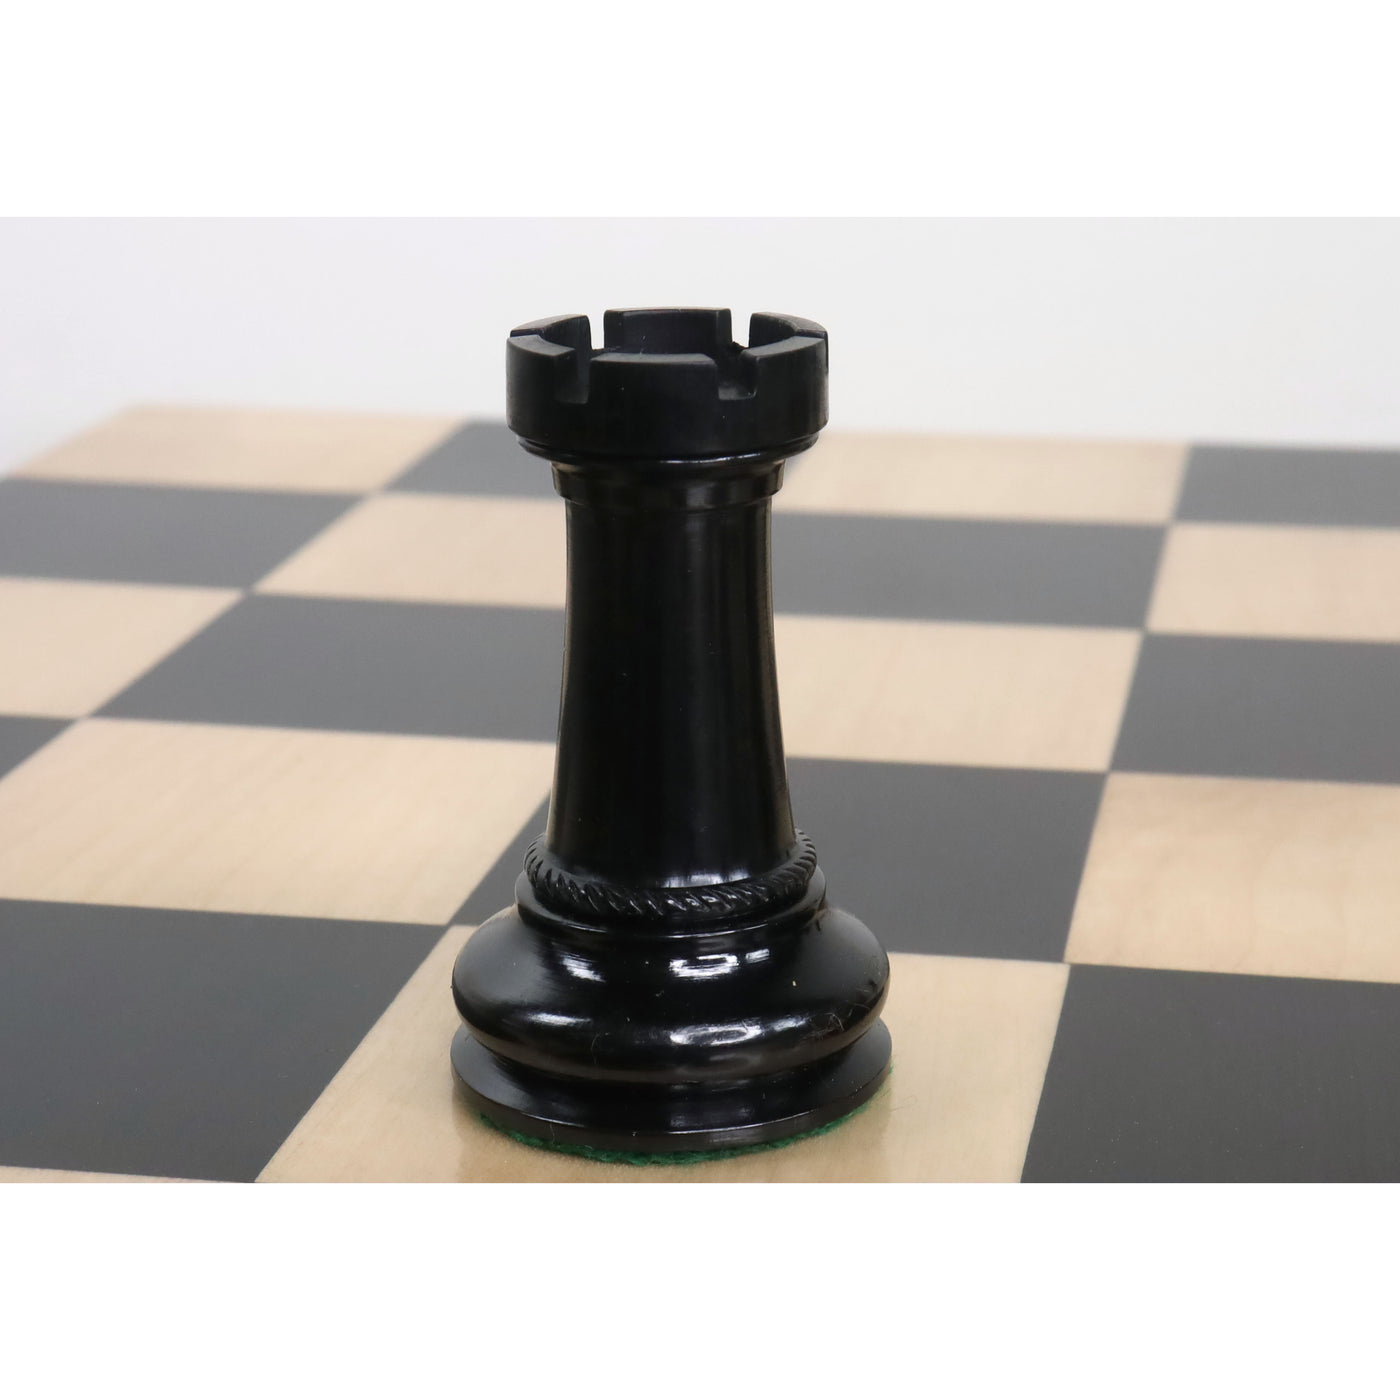 4.5" Imperator Luxury Staunton Ebony Wood Chess Pieces with 23" Large Ebony & Maple Wood Chessboard and Leatherette Coffer Storage Box